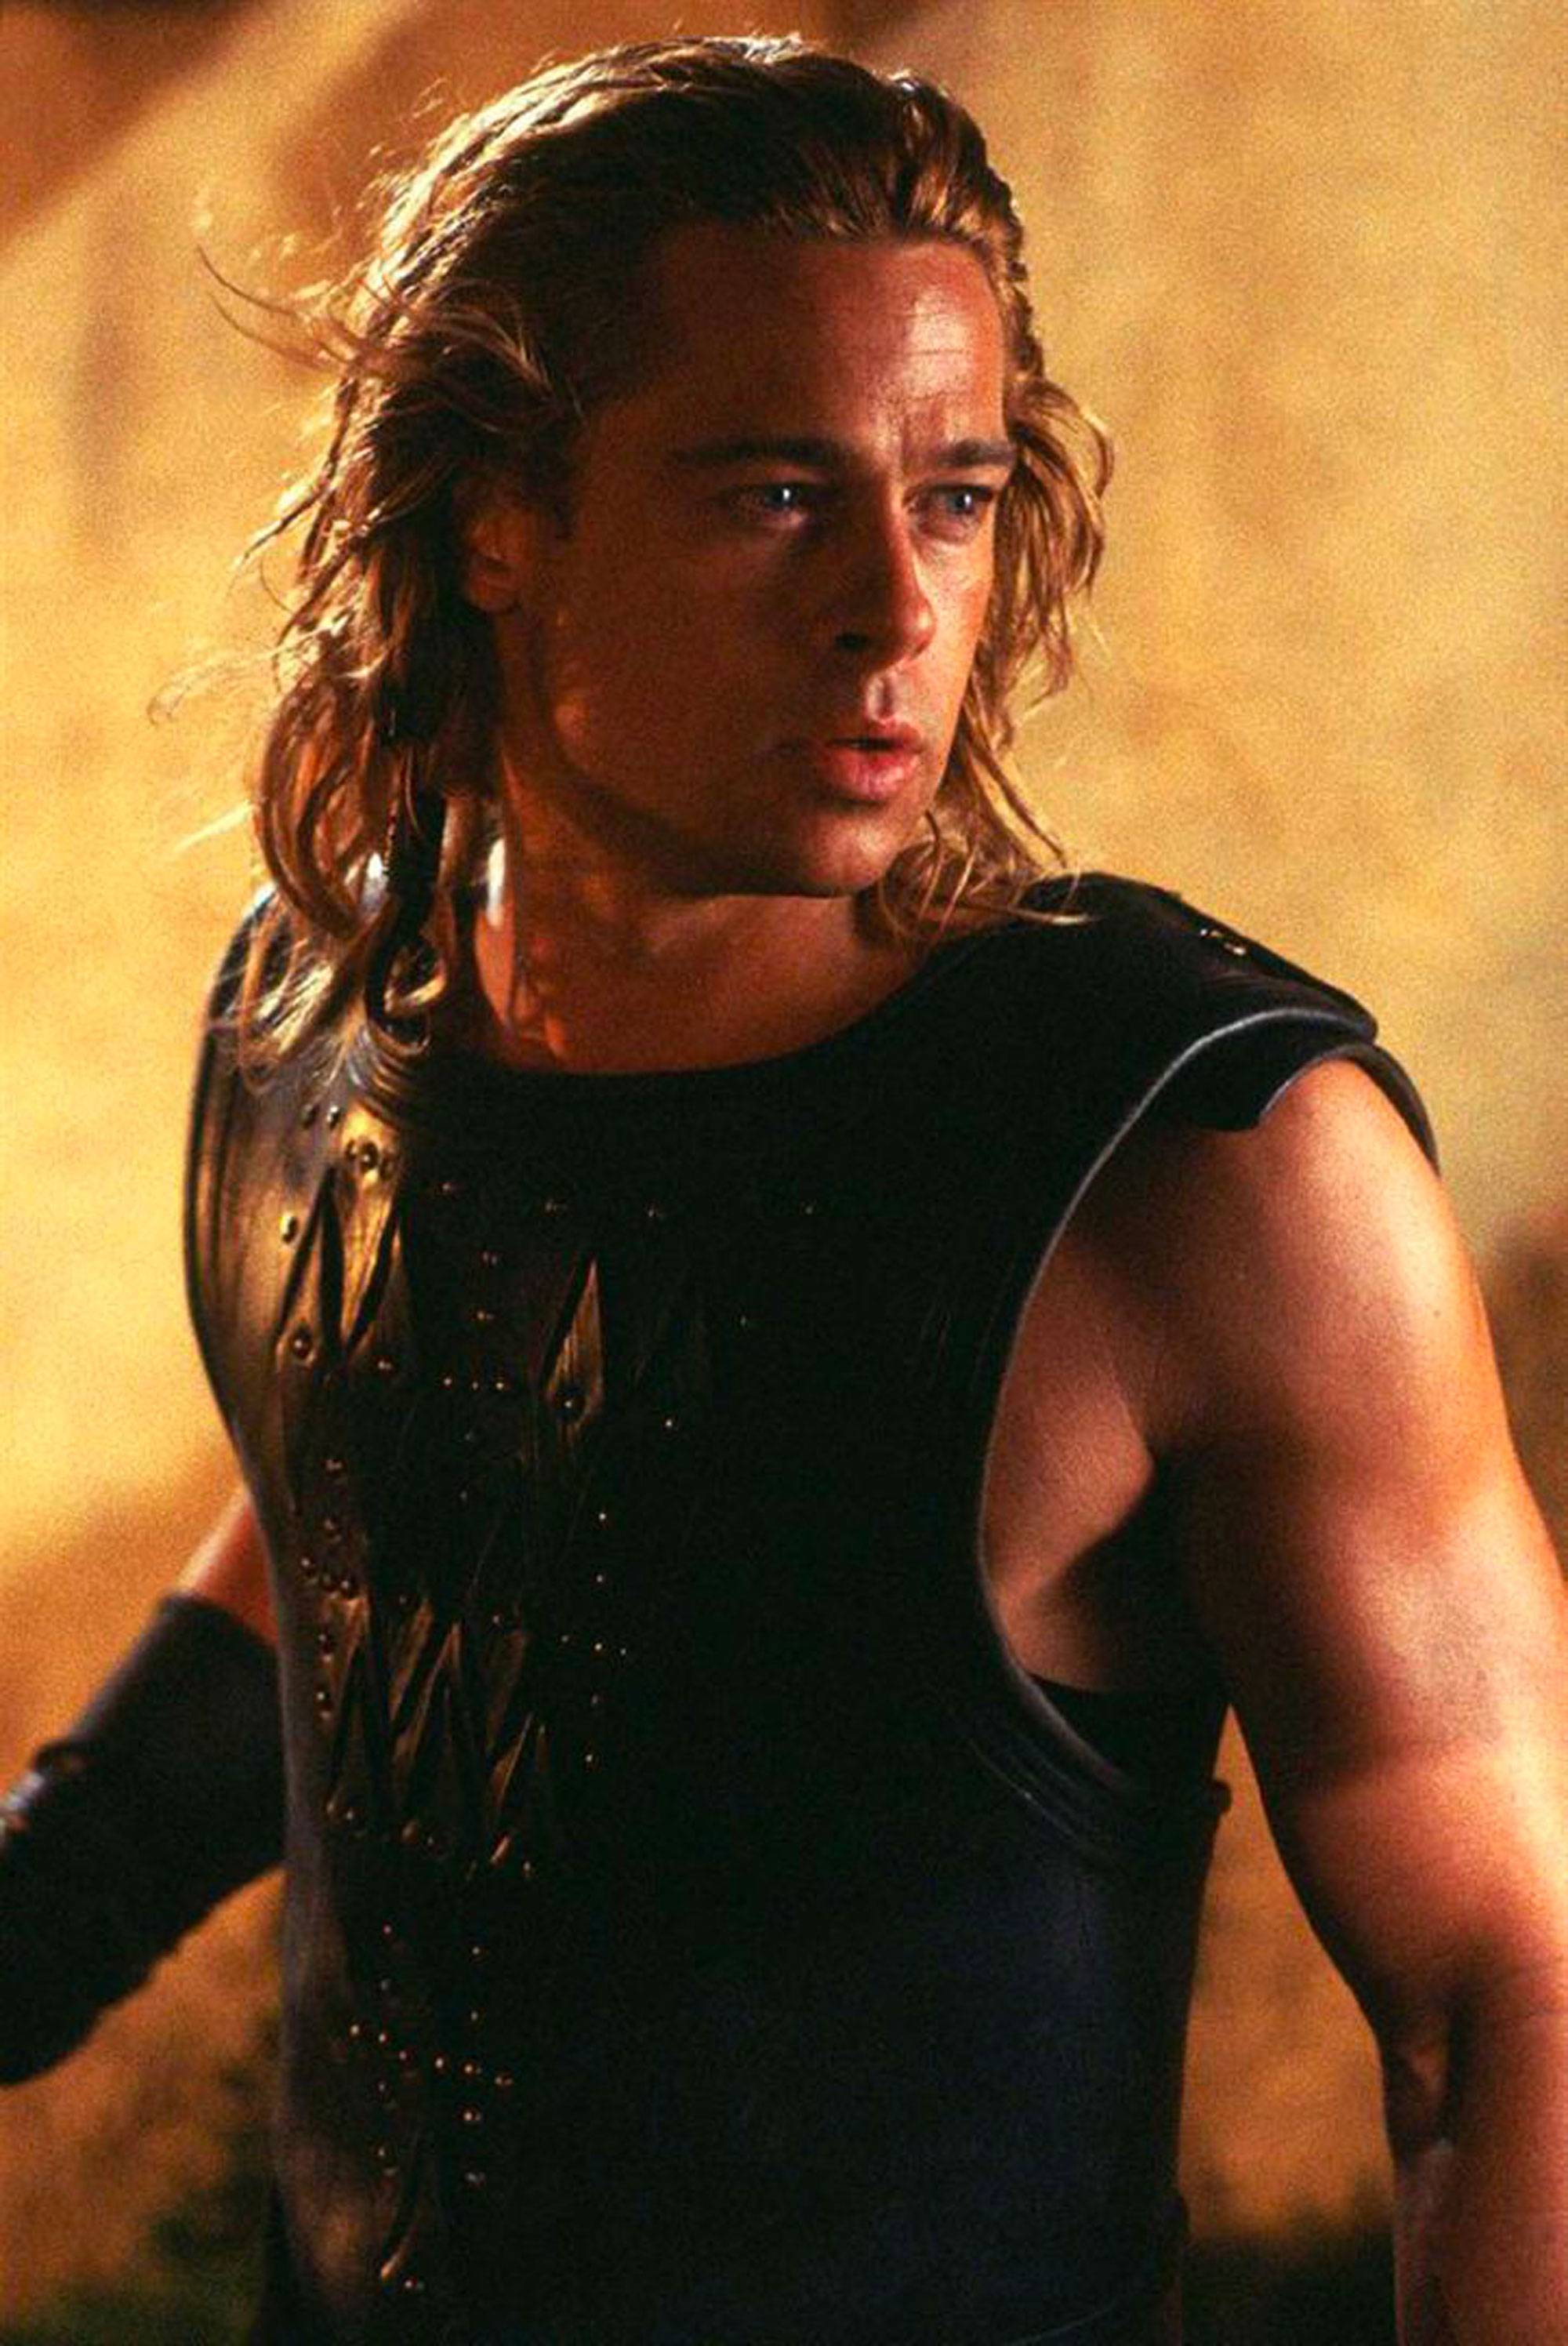 Brad Pitt dans le film "Troie" (2004) © Warner Bros France